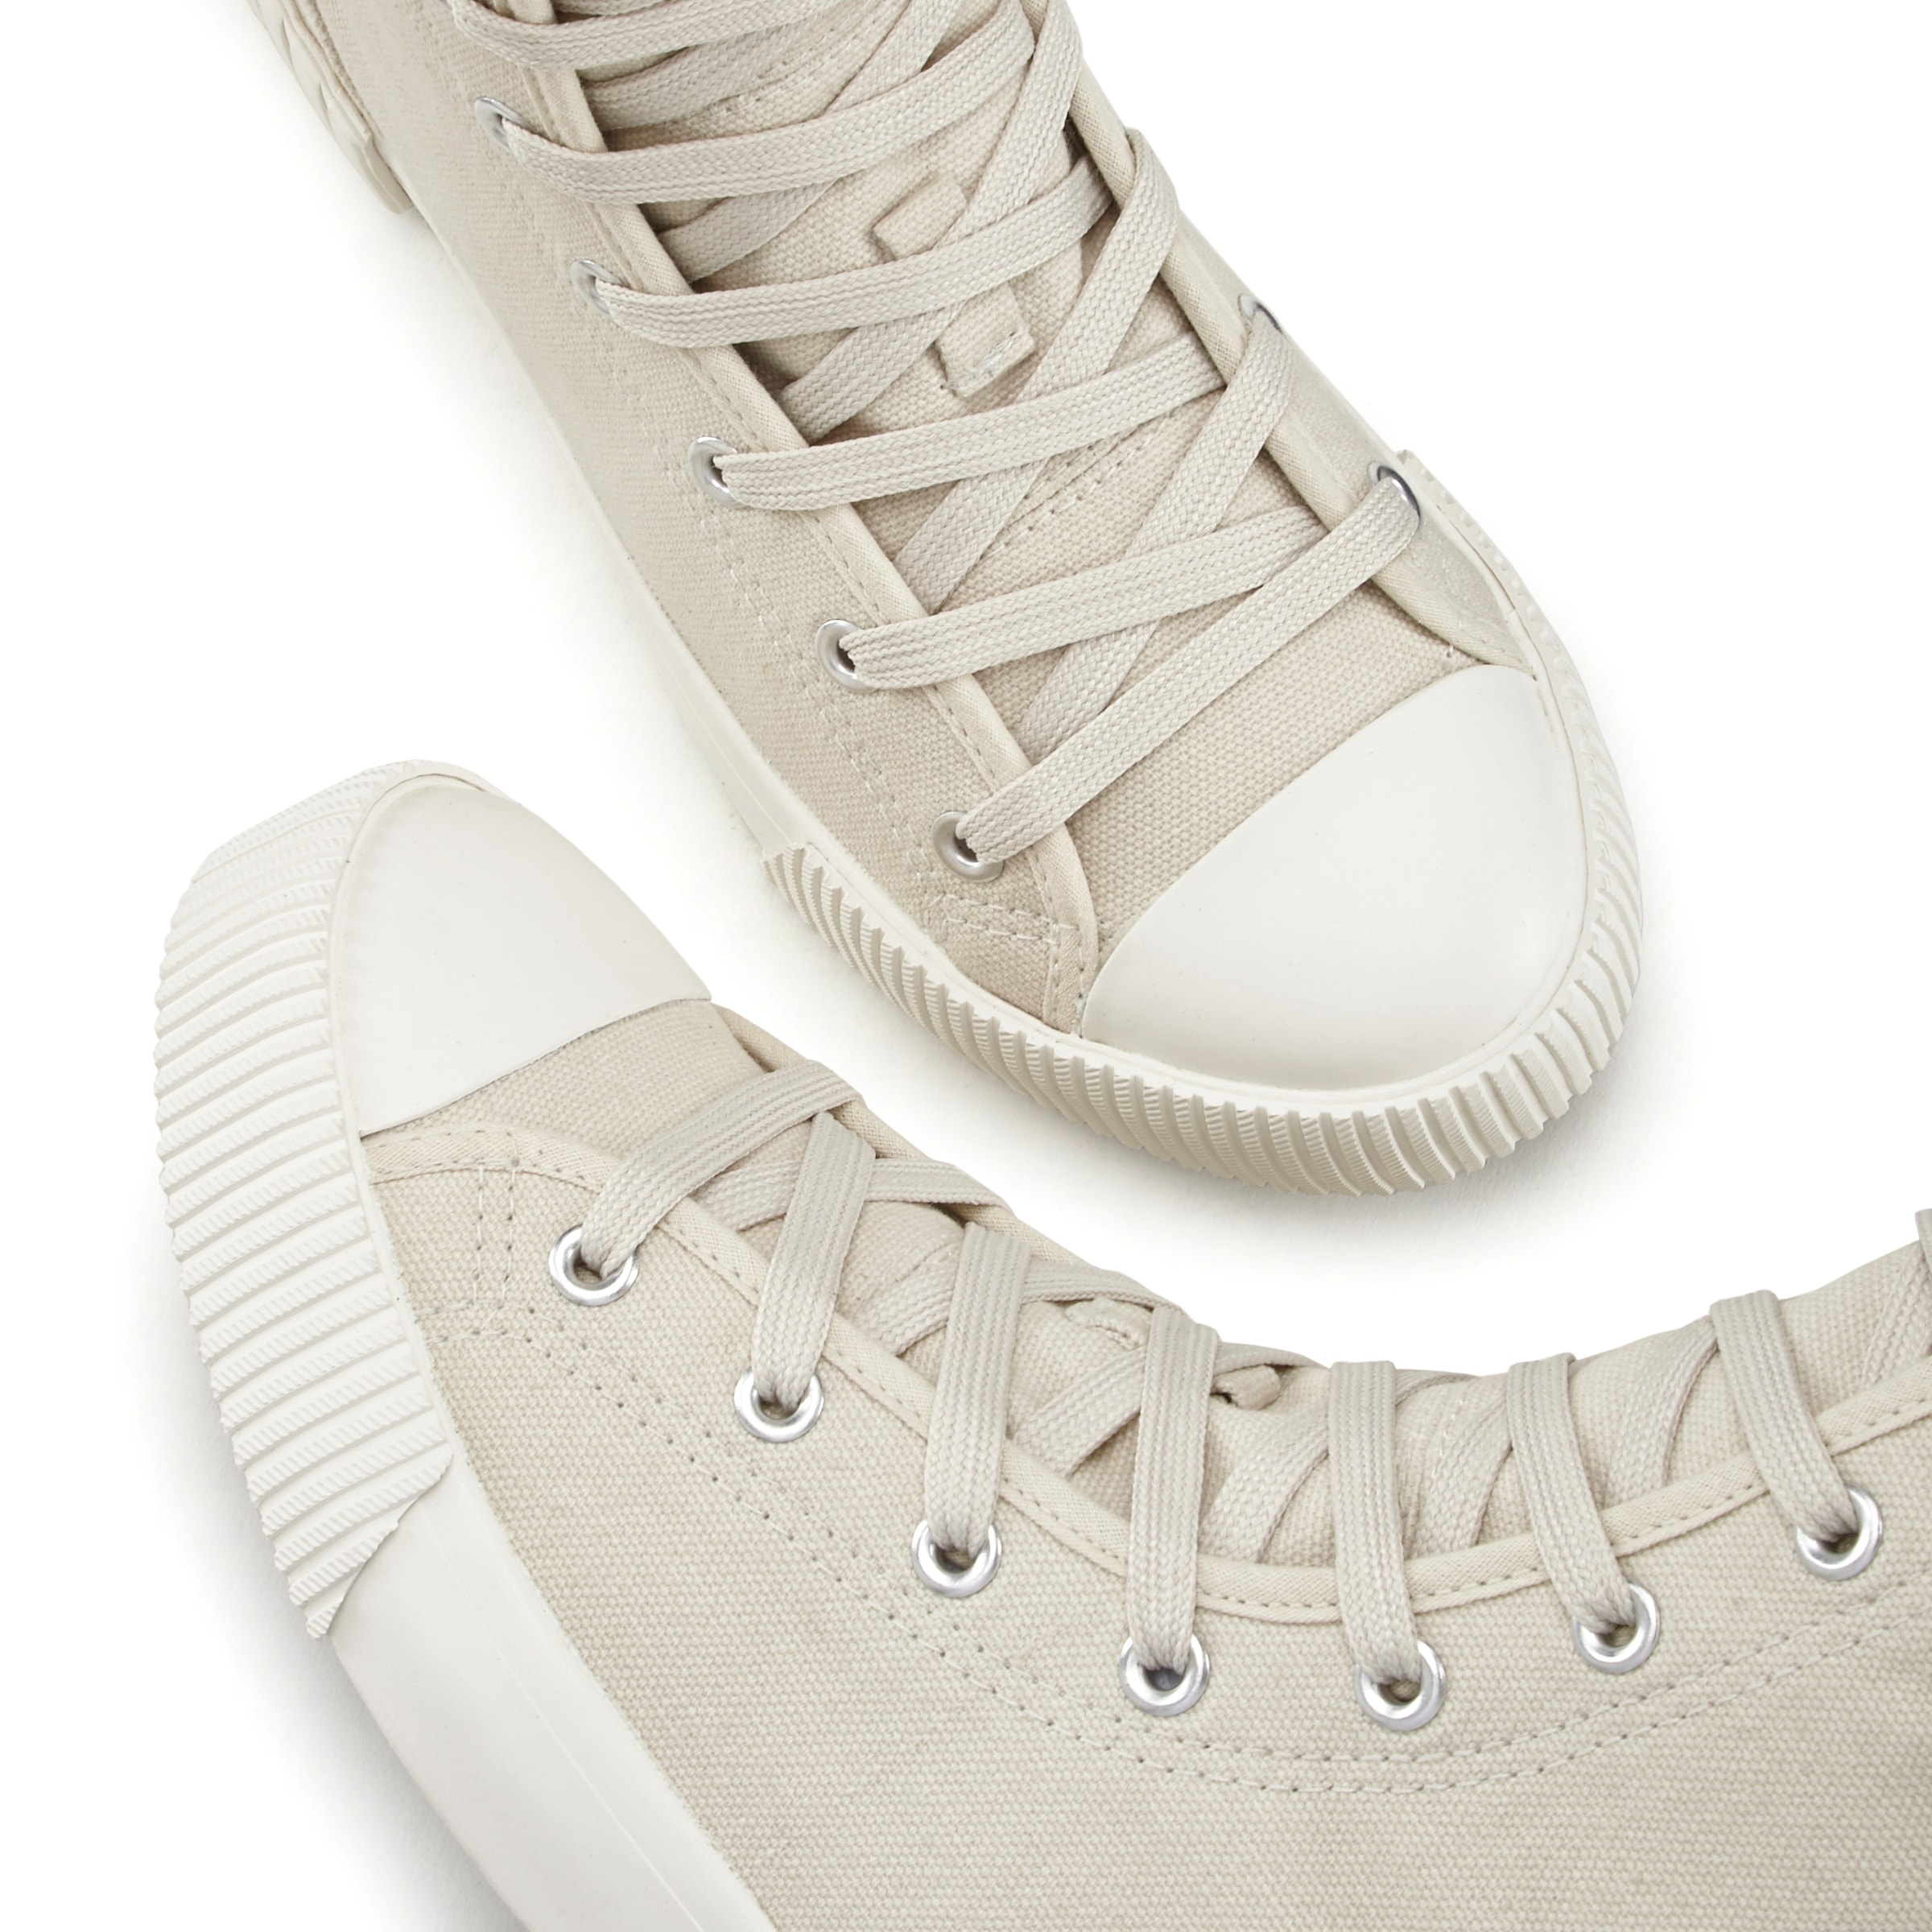 LASCANA Stiefelette, High Top Sneaker, im Look Shop trendiger bestellen OTTO Textil-Boots, Schnürschuh, Online Combat